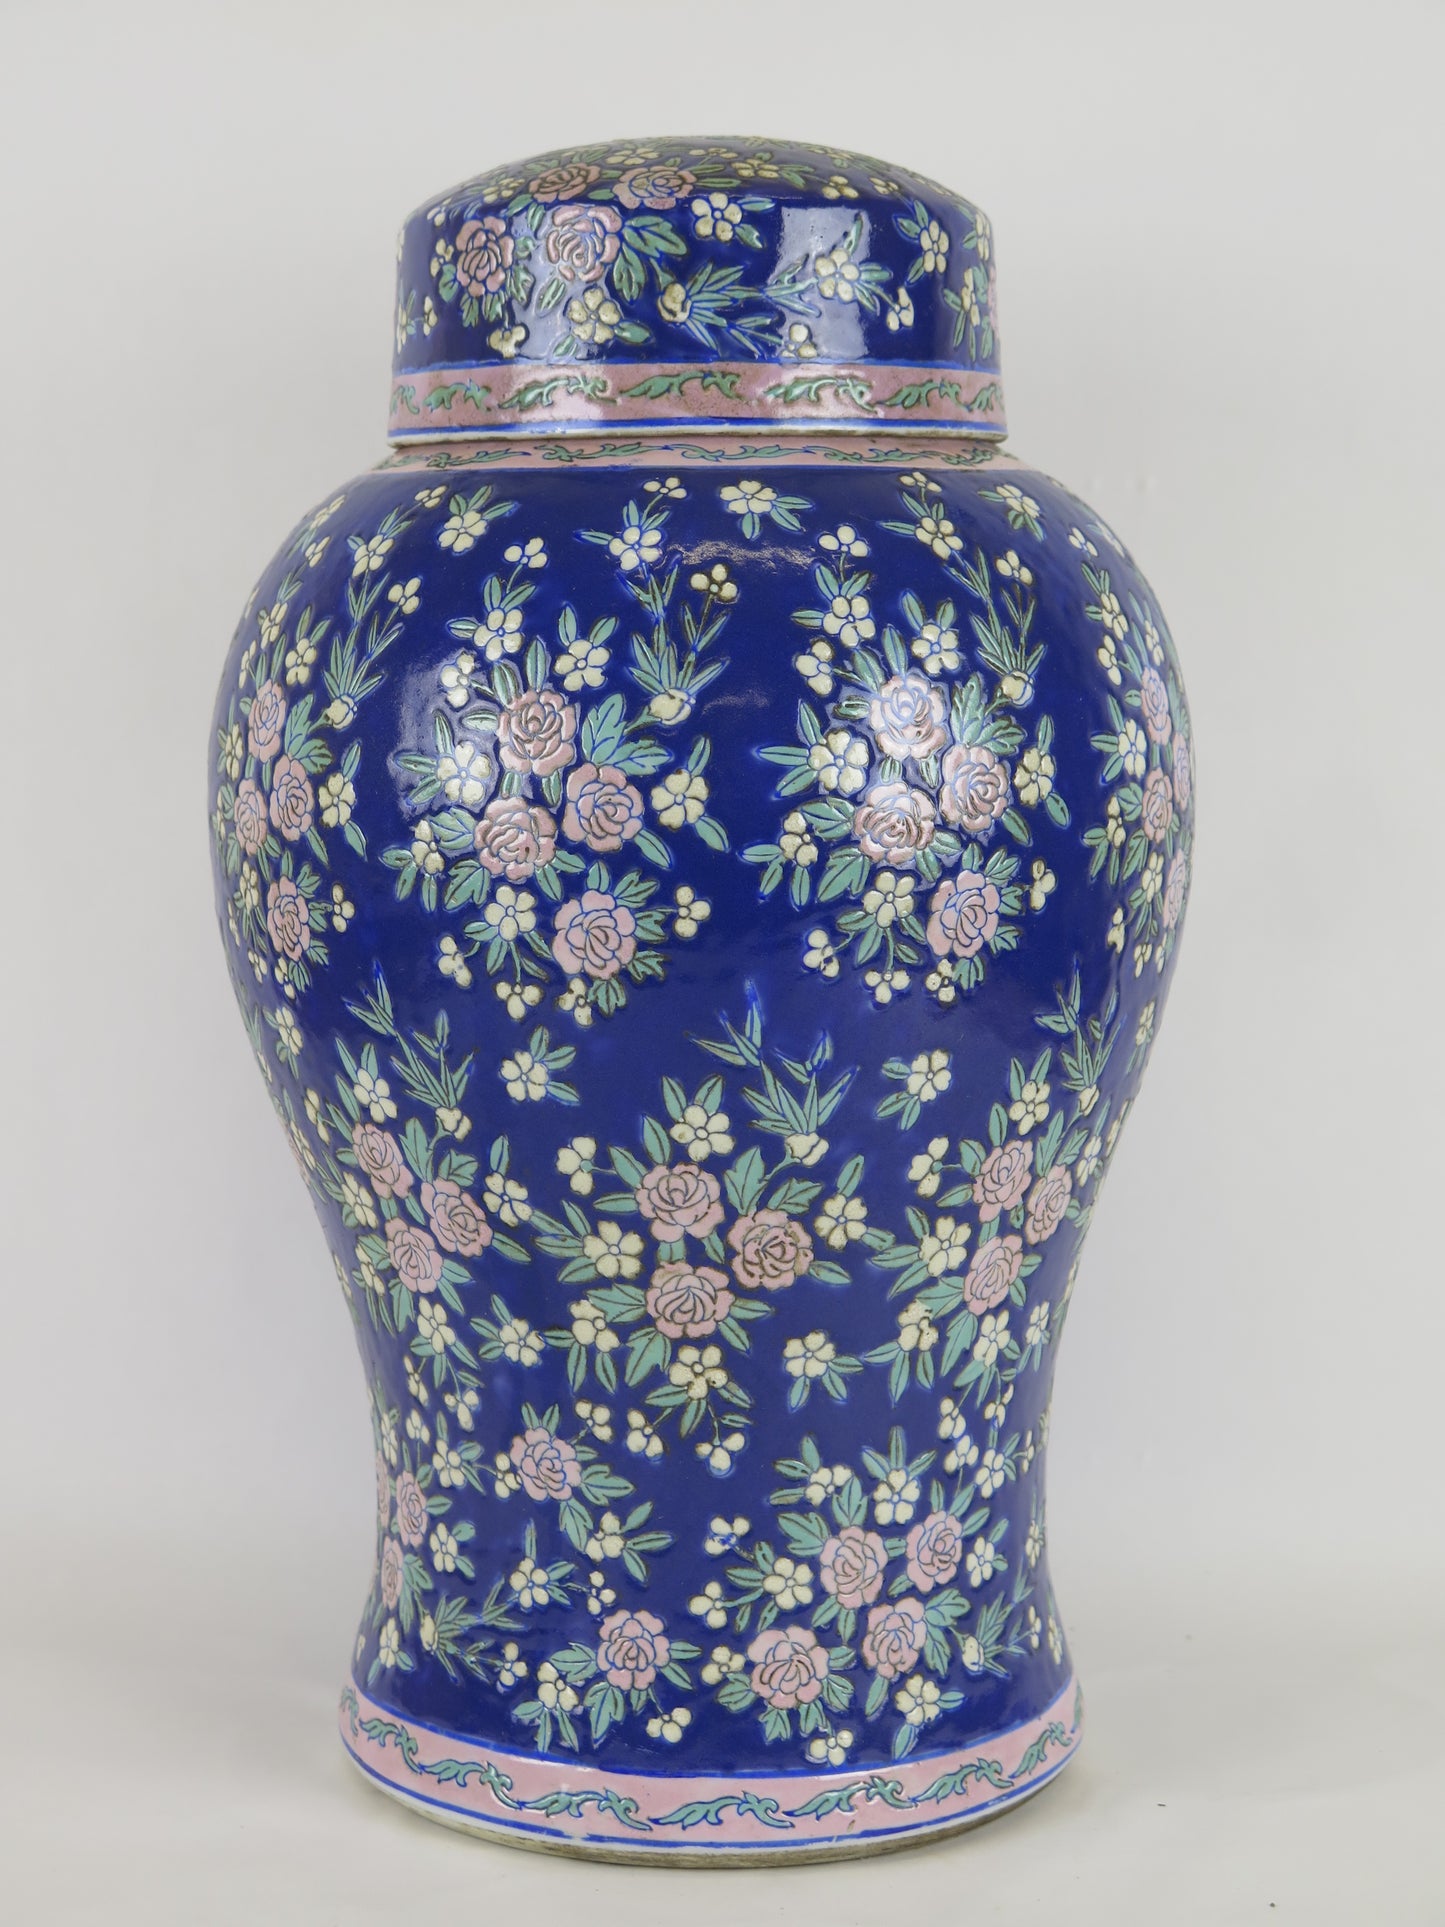 Large hand-painted vintage glazed ceramic vase with blue floral motifs, China Asia, 1900s CM5